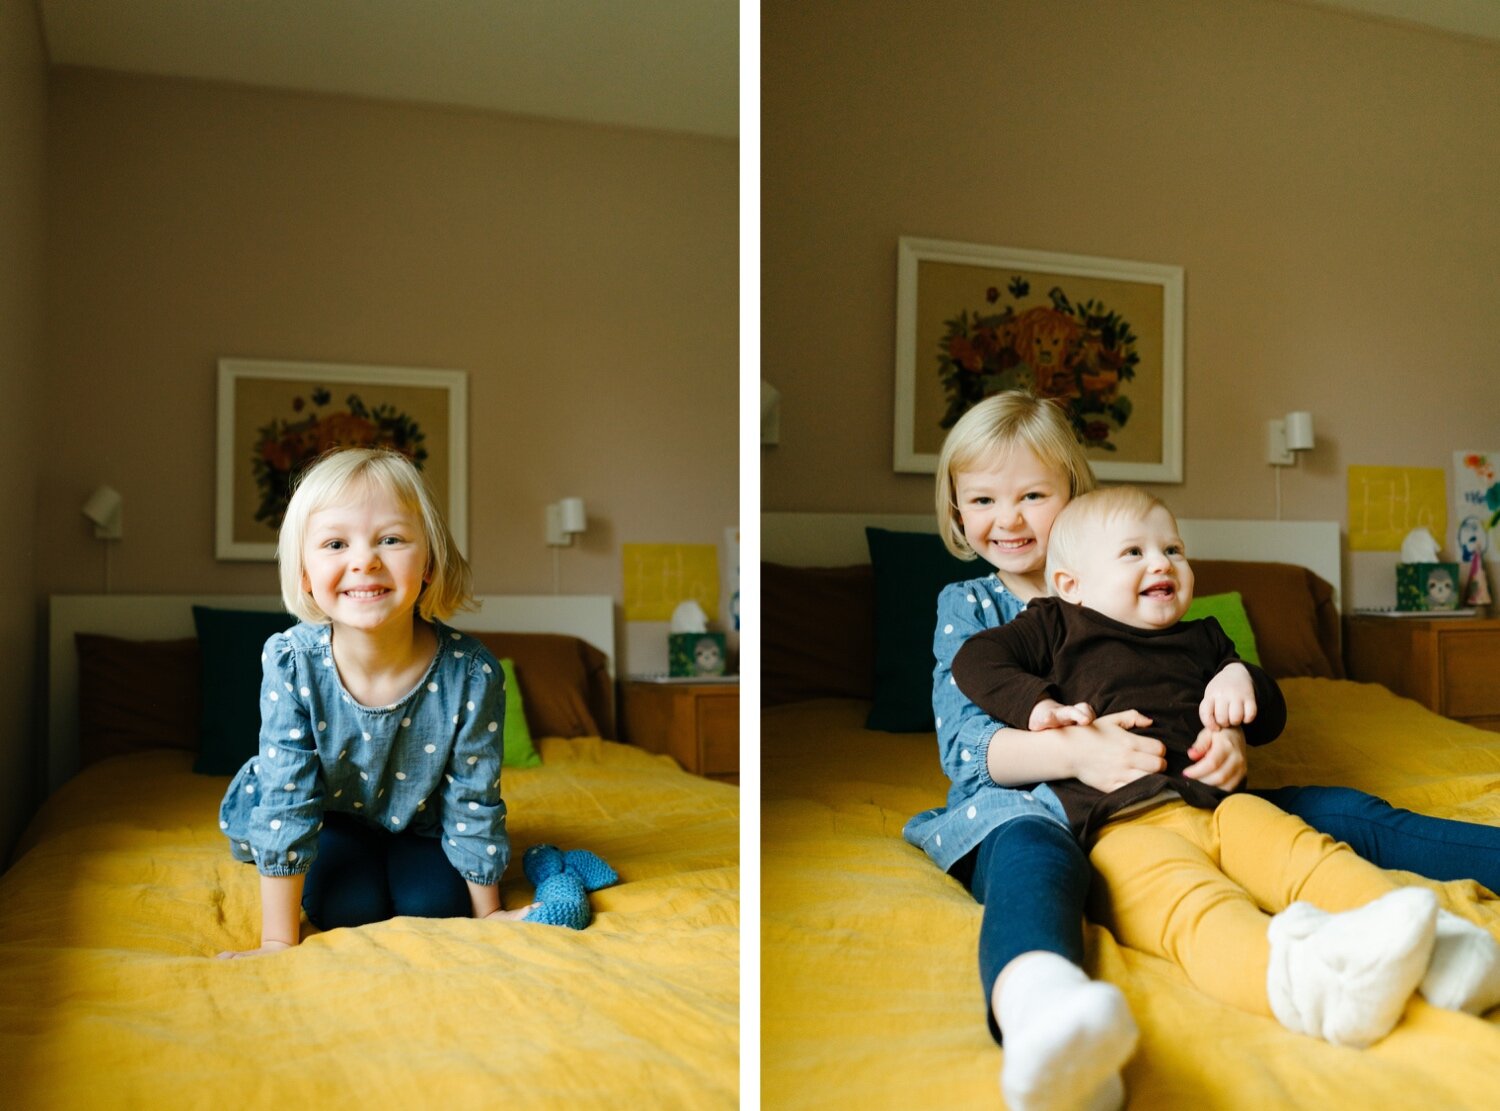 Seattle Family Photographers